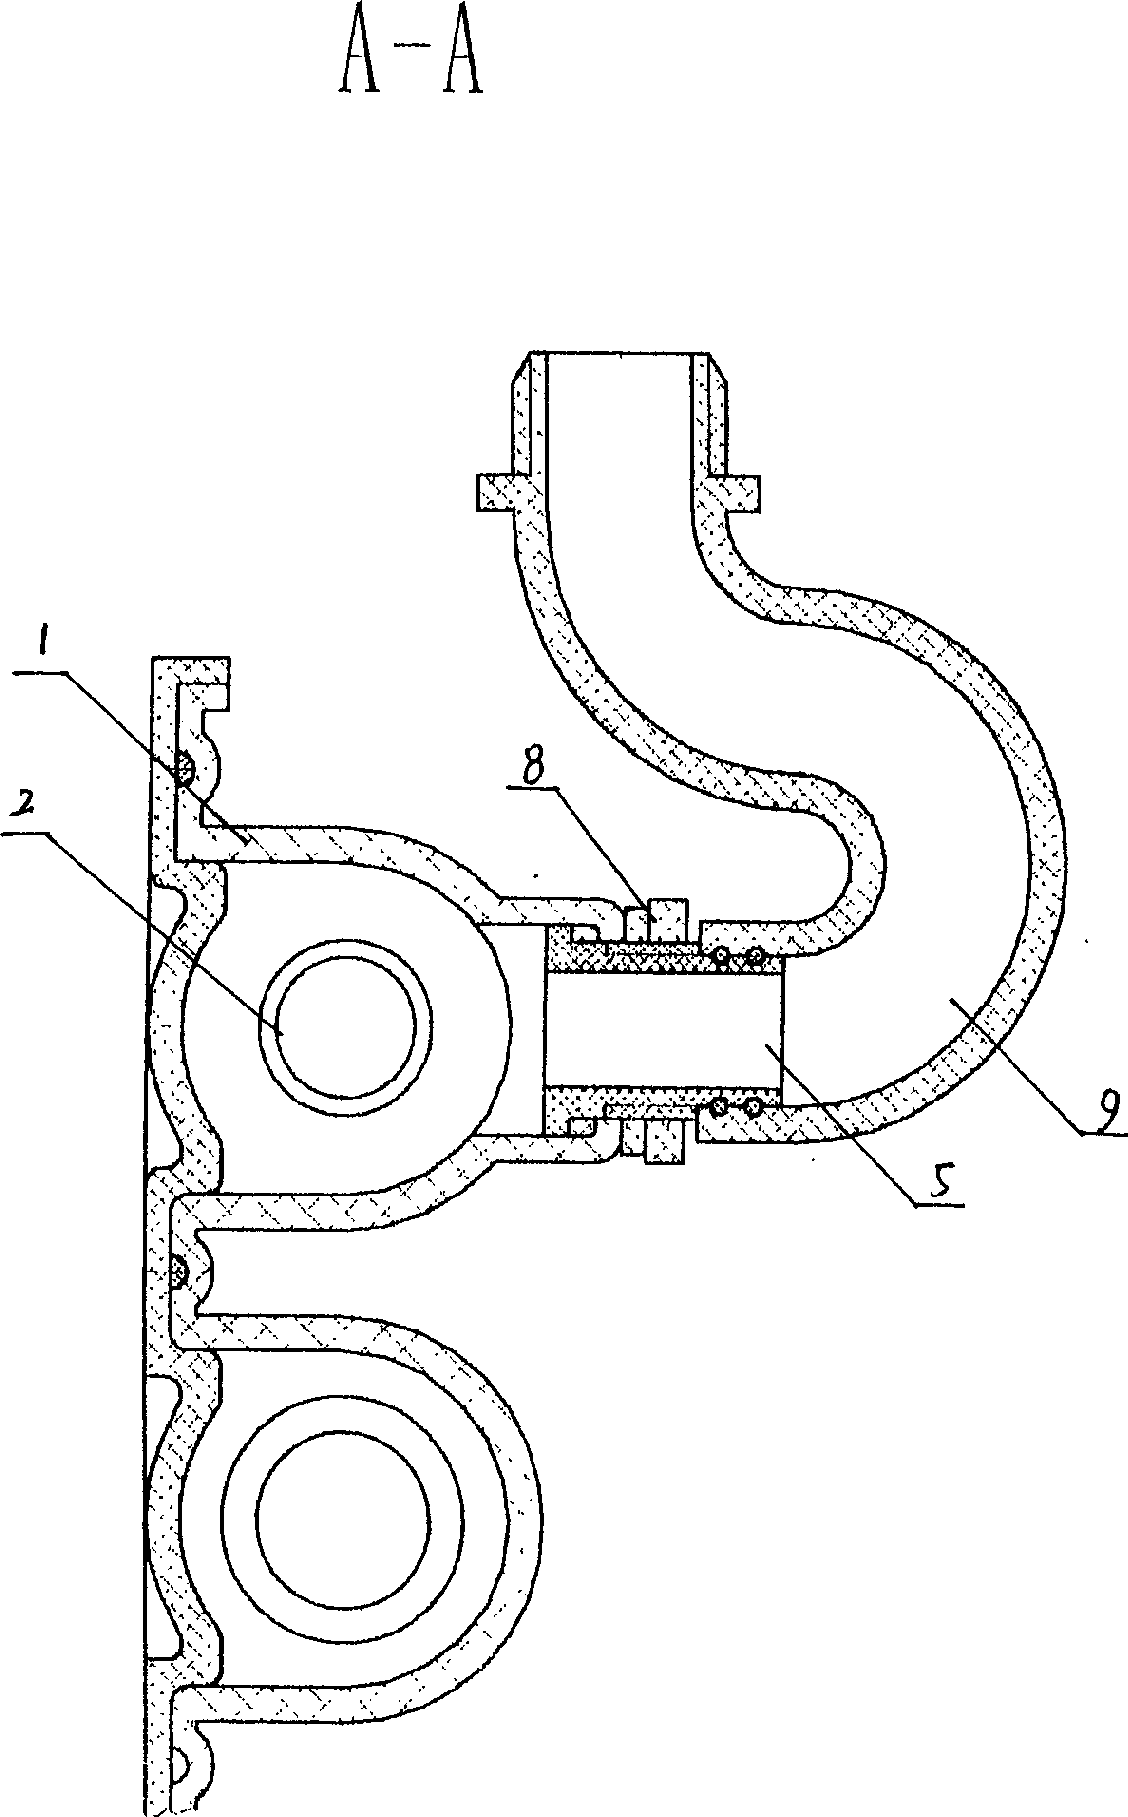 Spiral bellows type heat exchanger